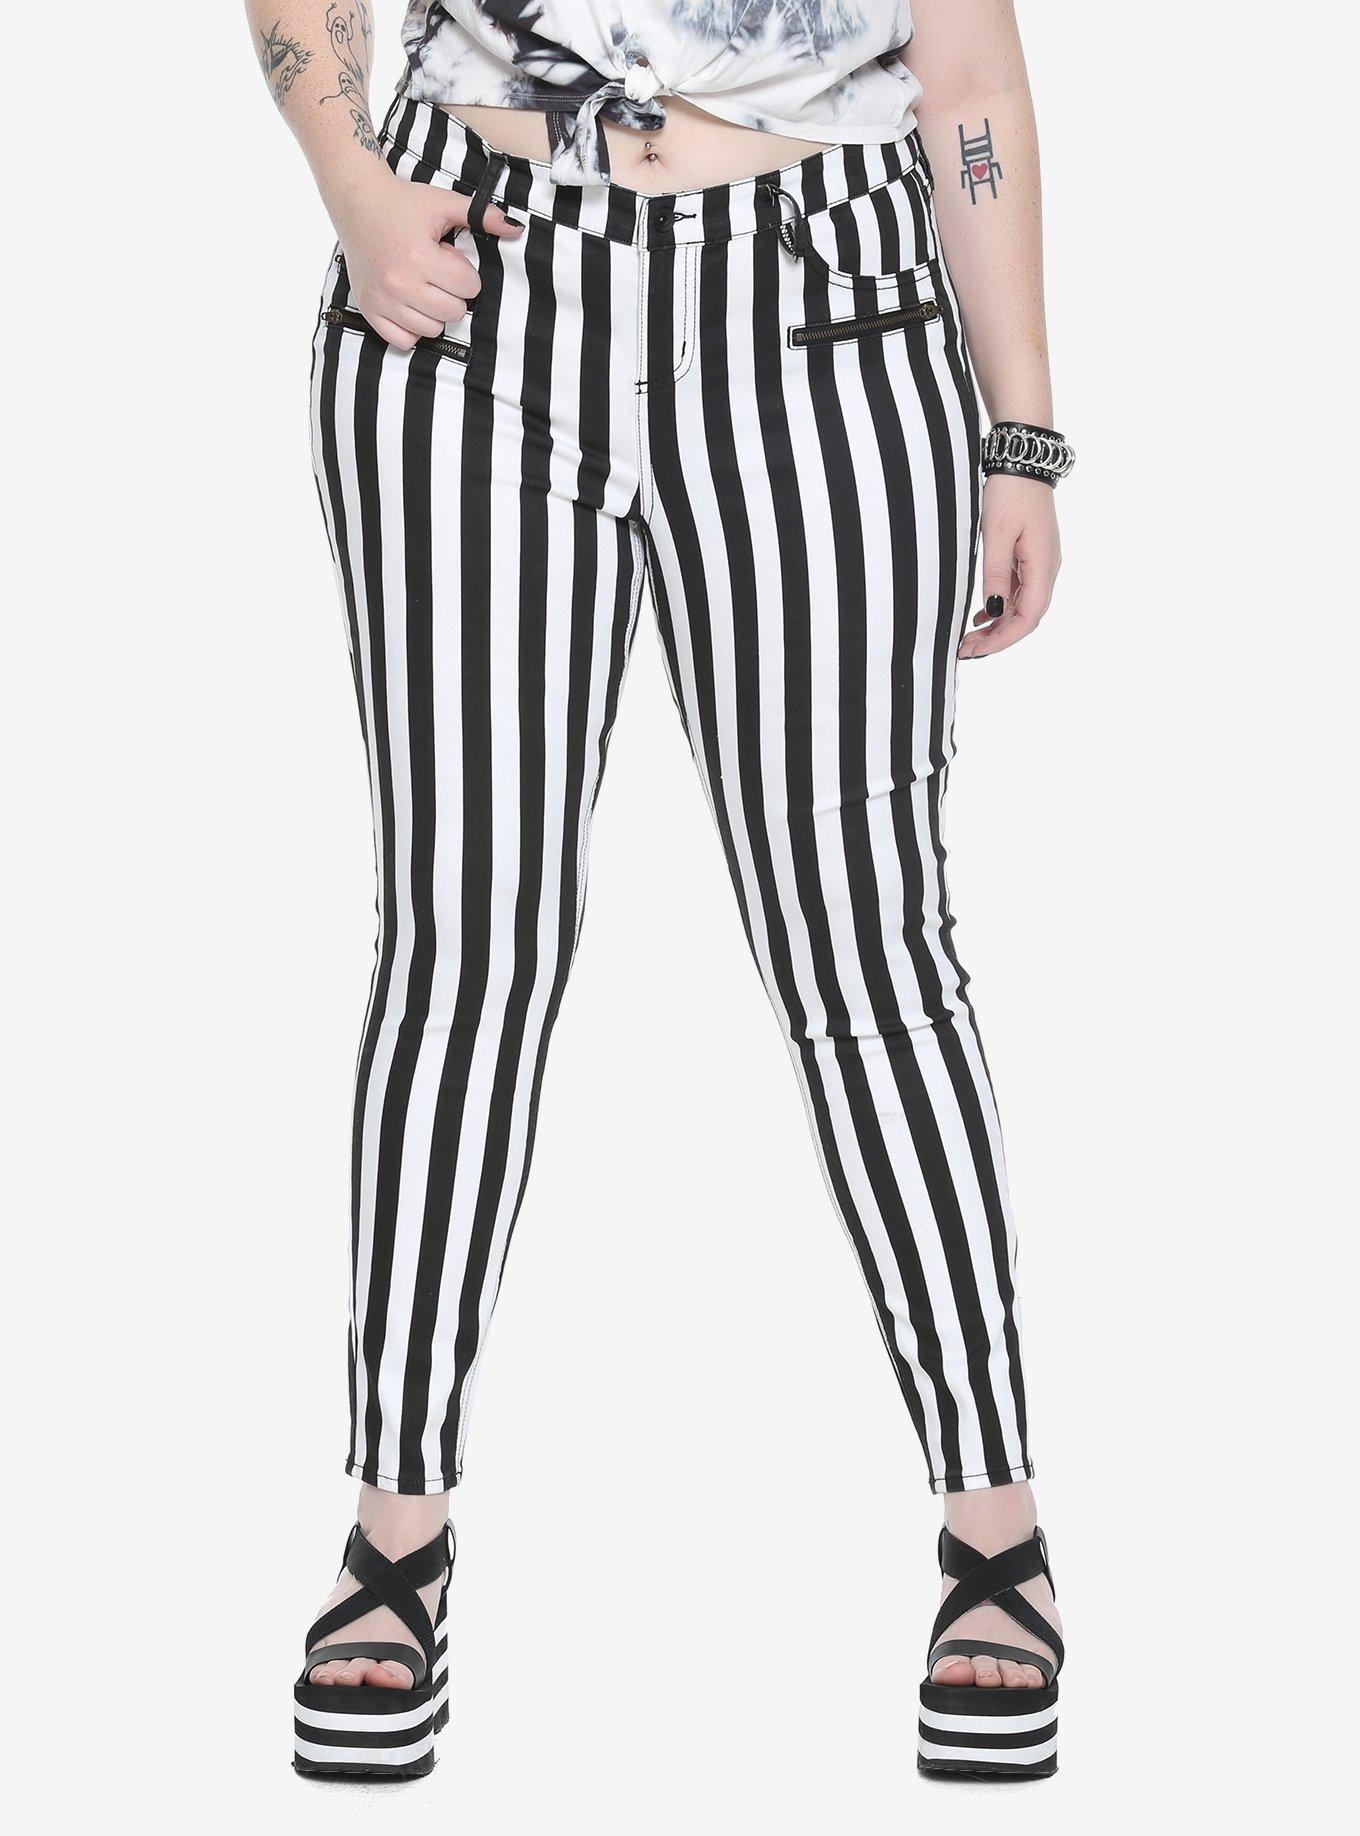 Blackheart Black & White Striped Zippered Stingerette Jeans Plus Size